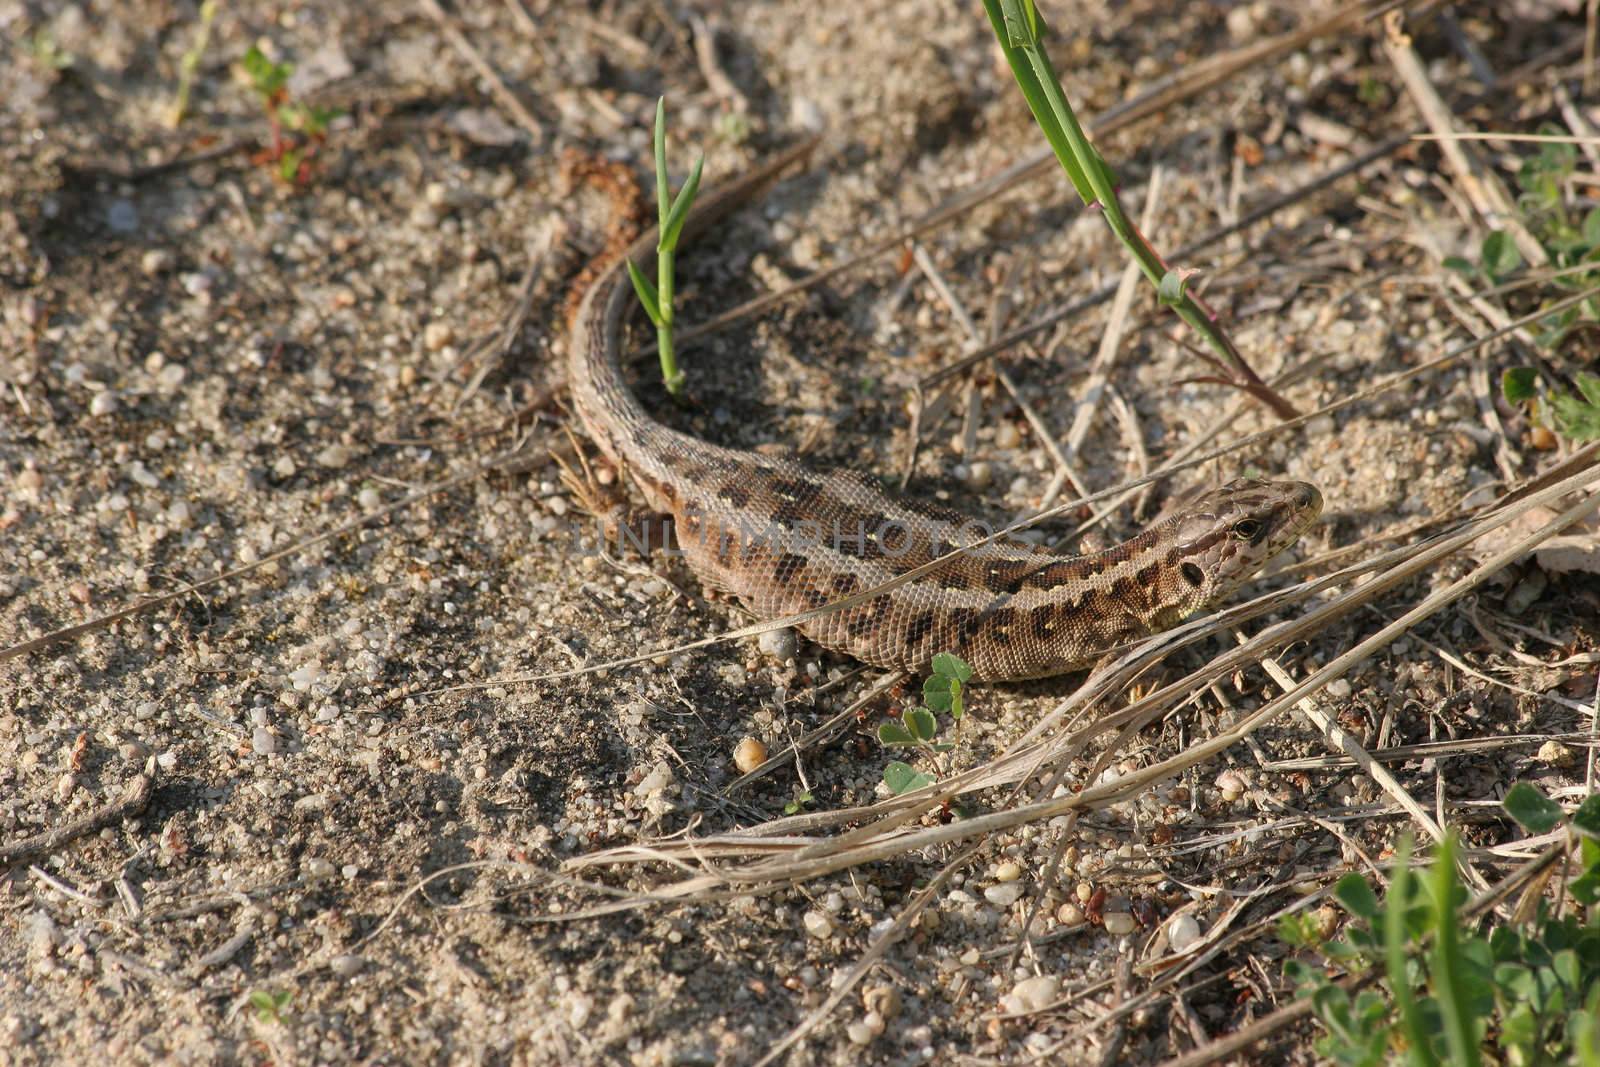 Sand lizard (Lacerta agilis) - pregnant female sunbathing